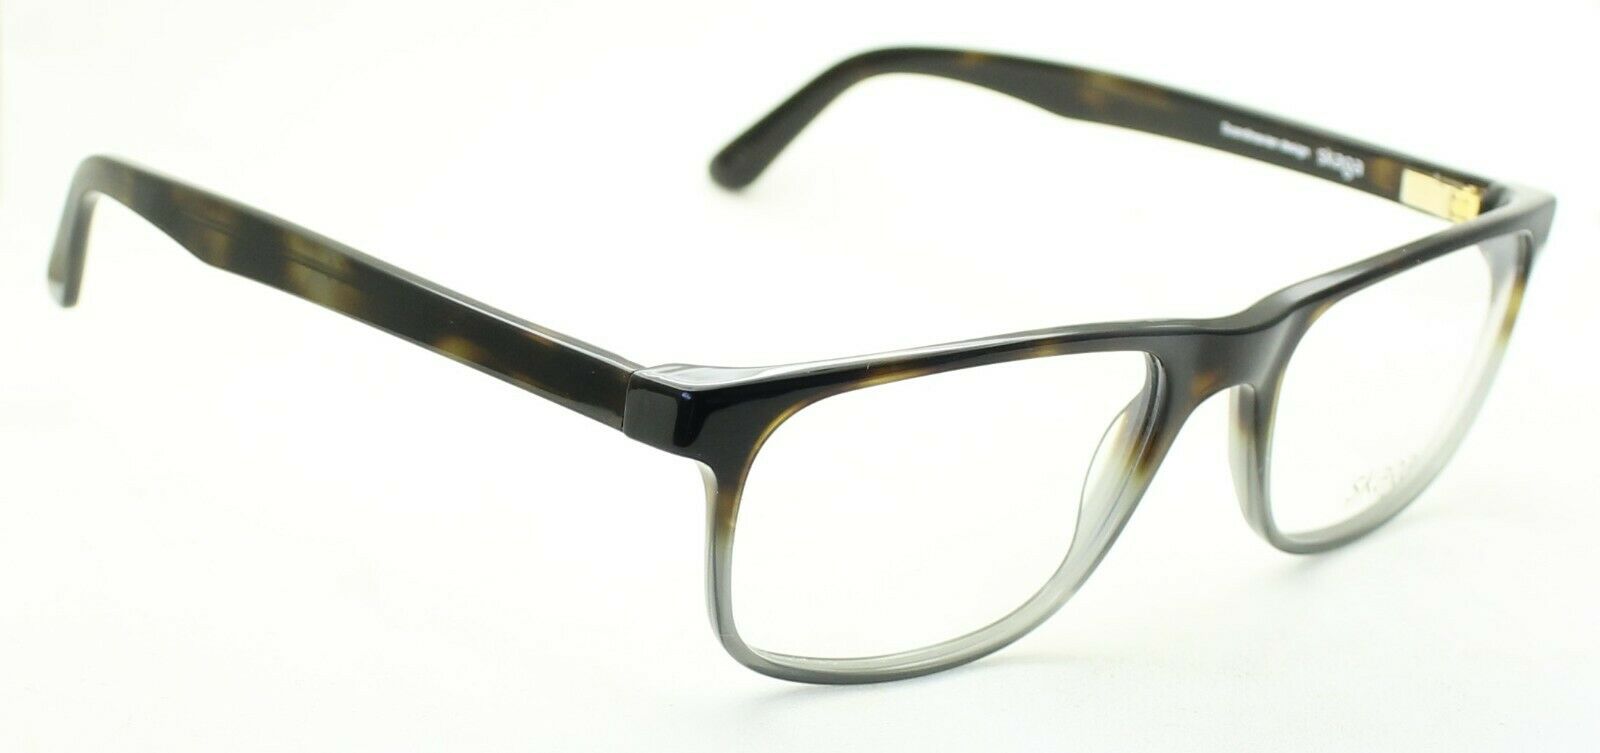 SKAGA SWEDEN 2678 BUNN 210 58mm Glasses RX Optical Eyeglasses Eyewear Frames New